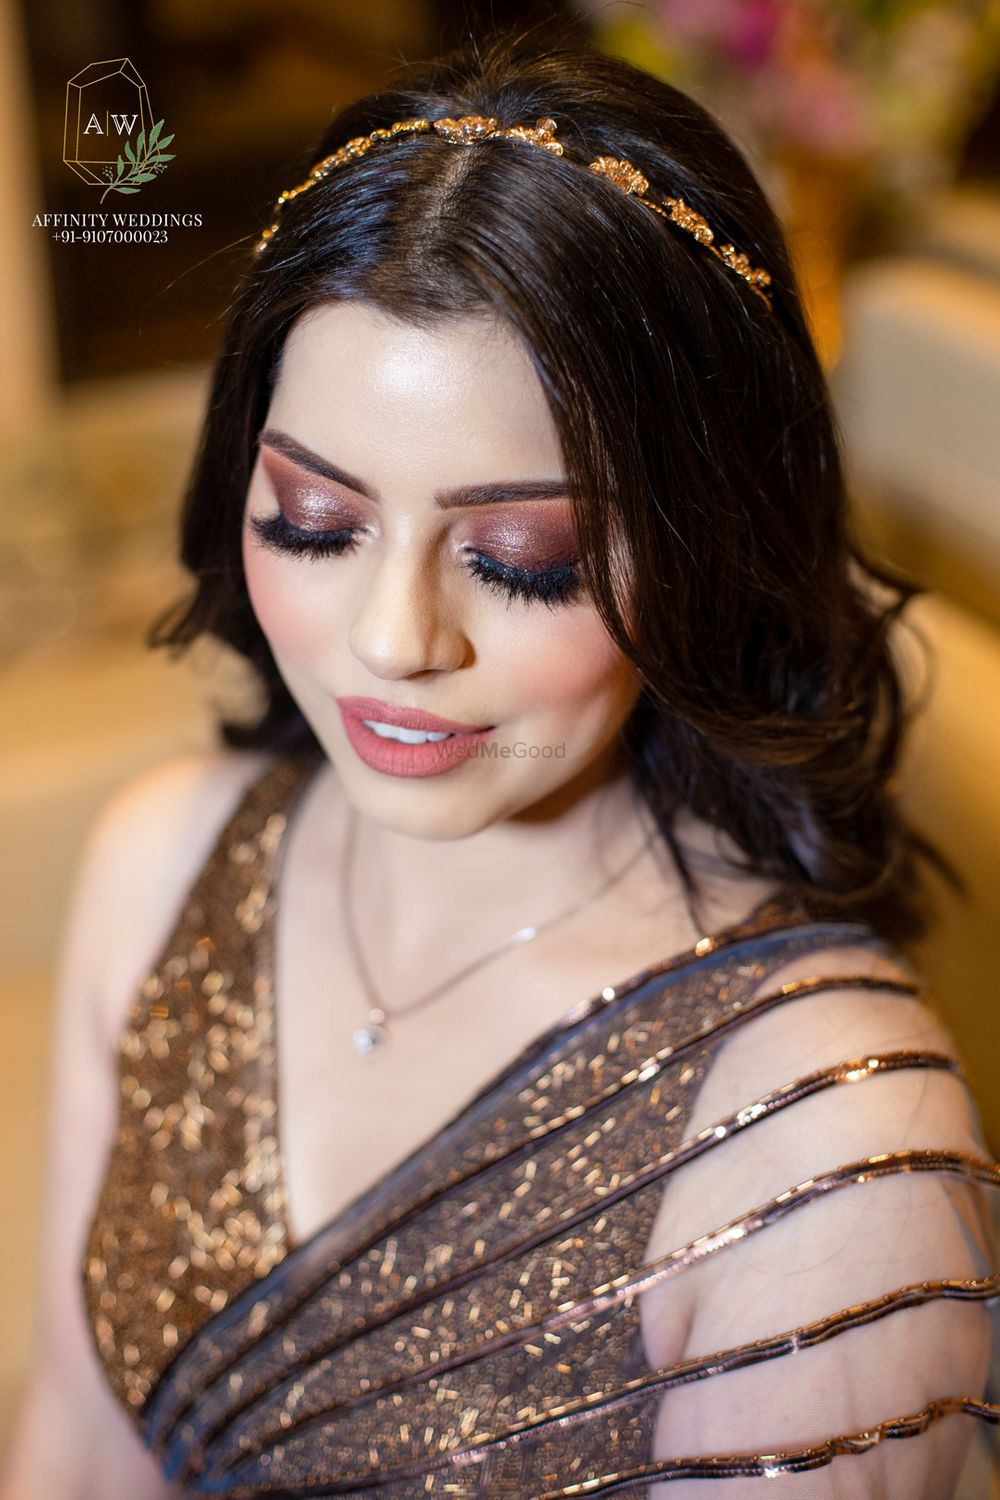 Photo From Aman + Sanjana - By Affinity Weddings